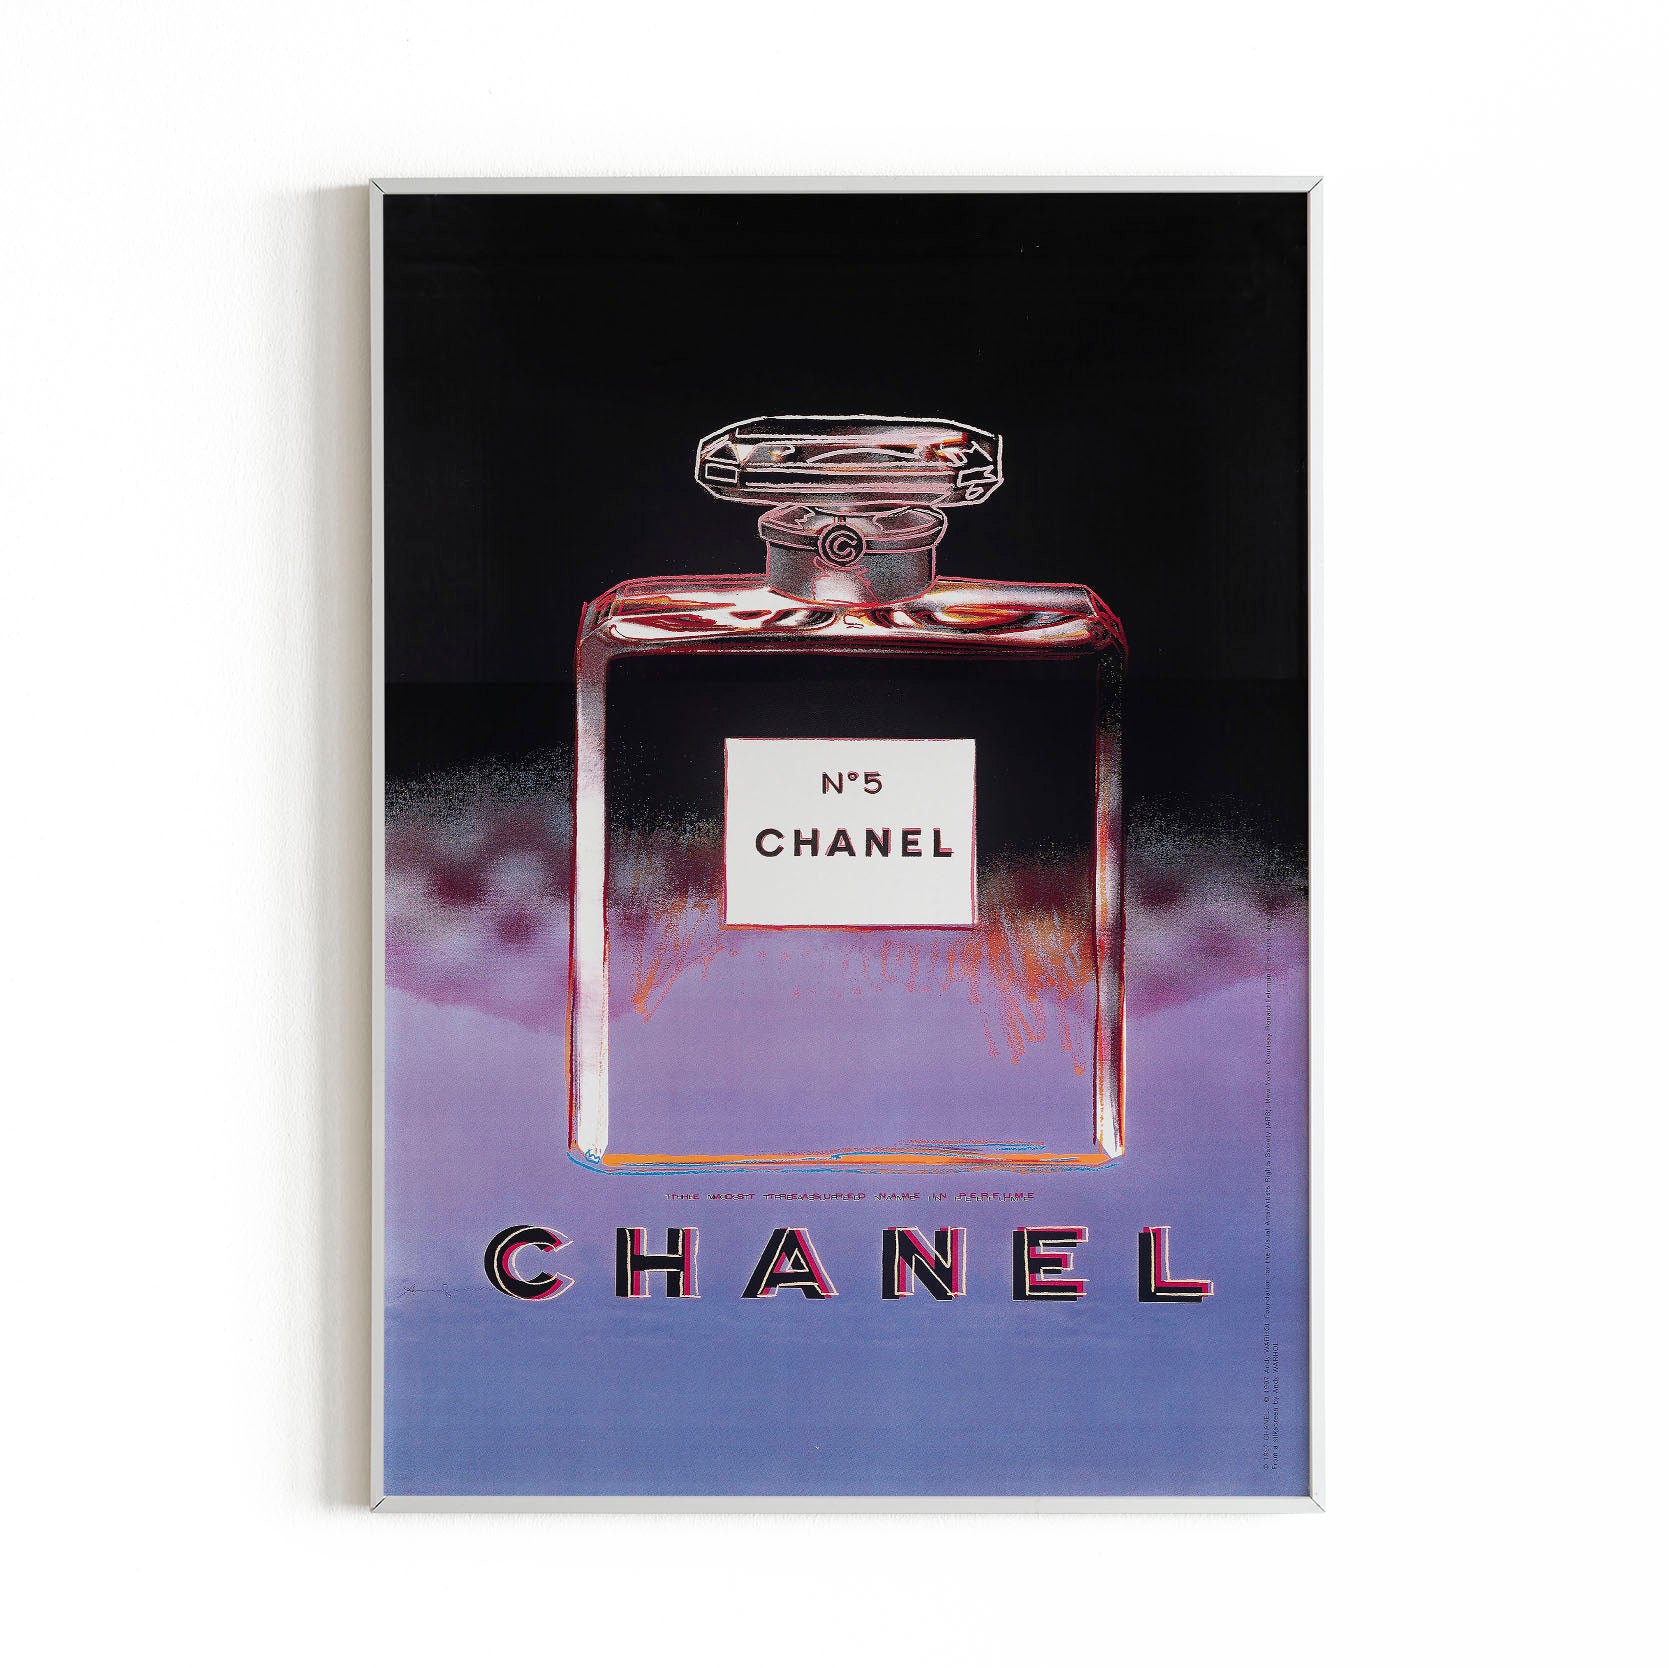 CHANEL, Art, Chanel 5 Poster